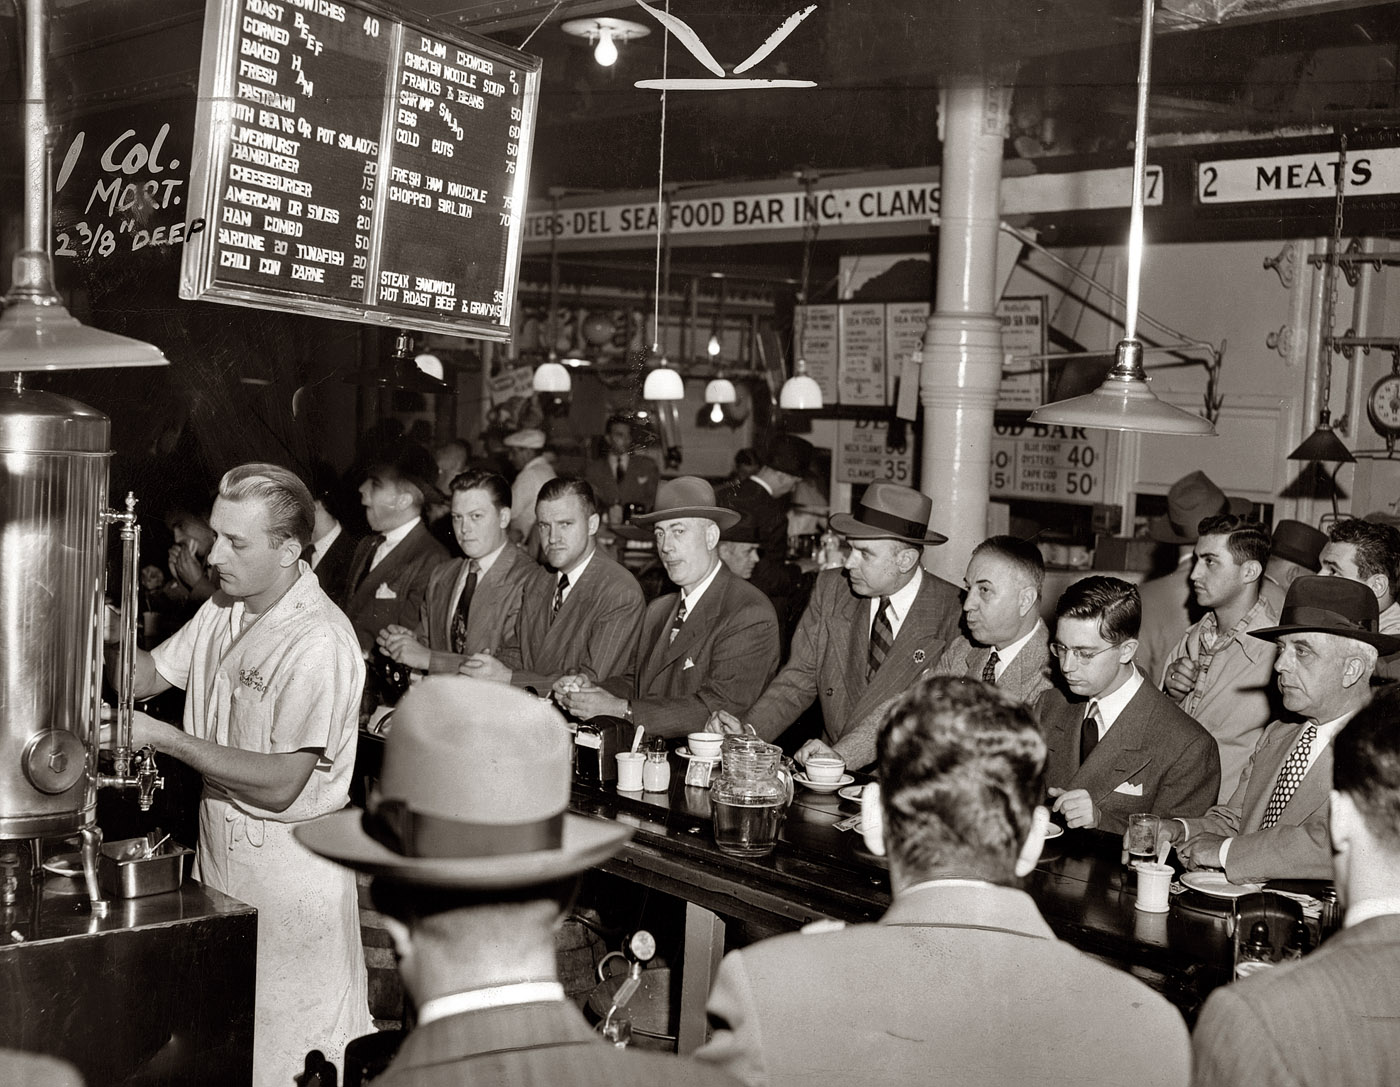 1950. Pete's Bar at Washington Market in Lower Manhattan. Photo by Al Aumuller, New York World-Telegram & Sun. View full size.